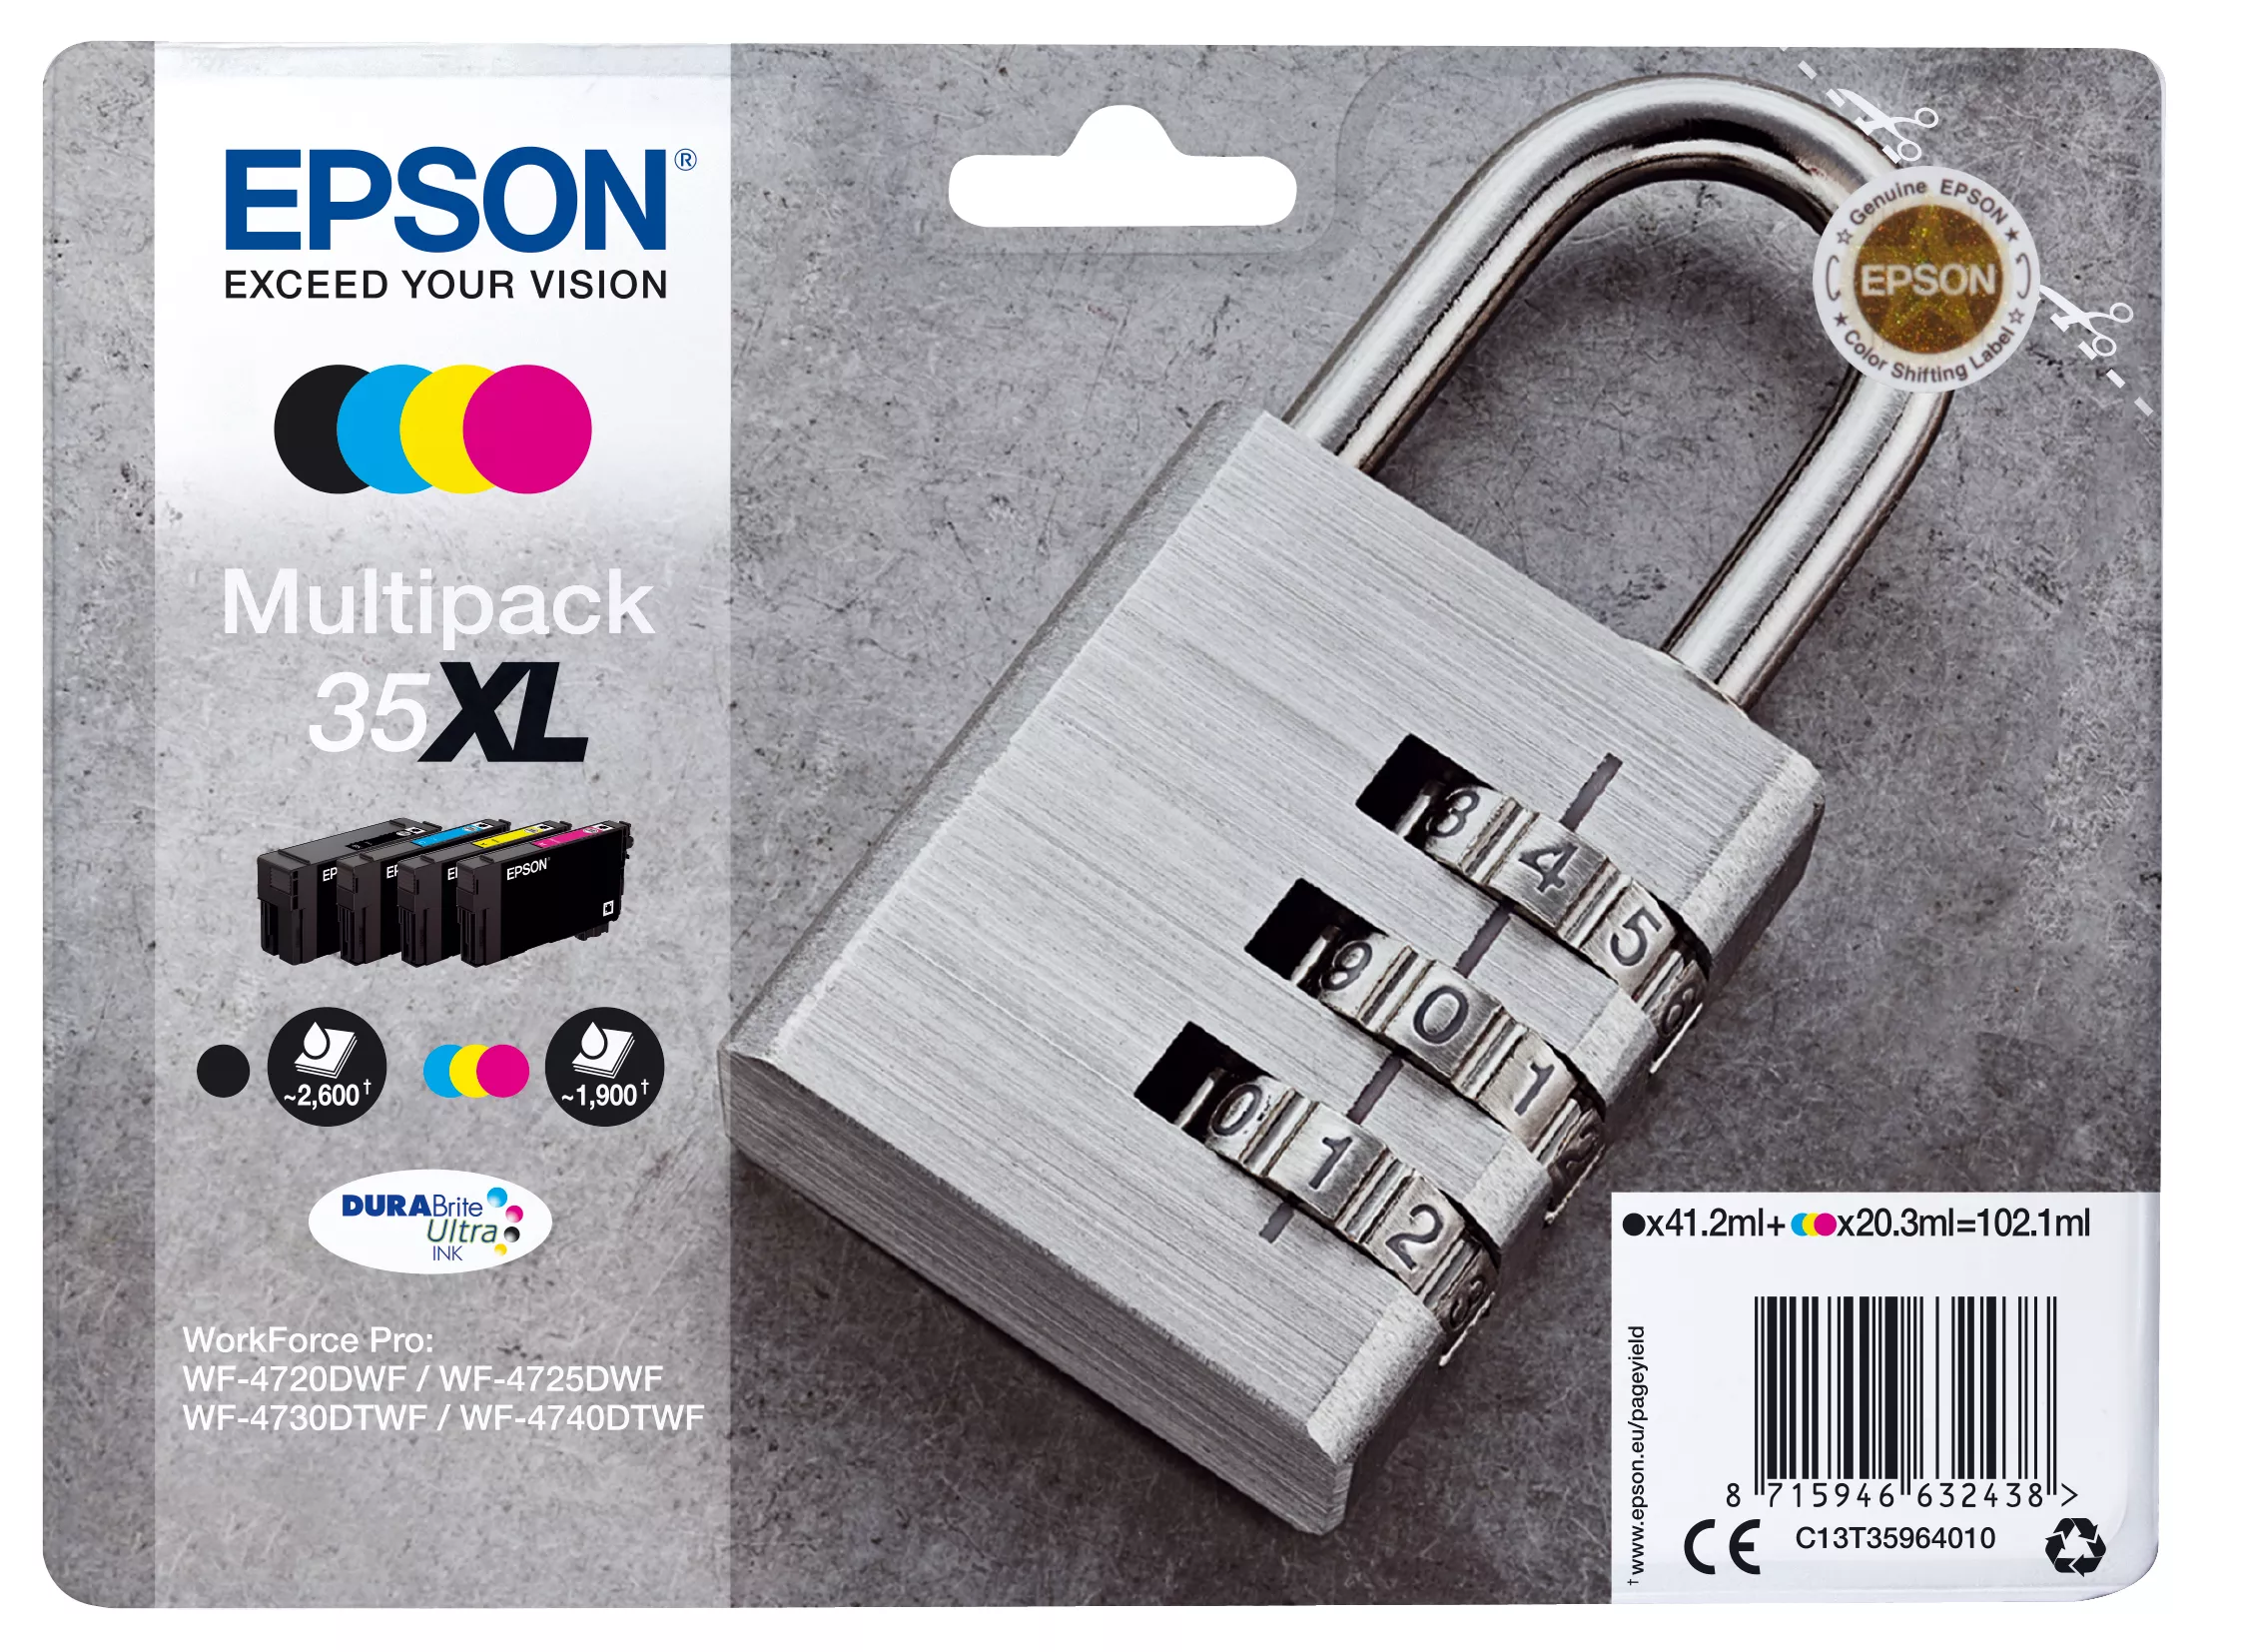 Revendeur officiel Epson Padlock Multipack 4-colours 35XL DURABrite Ultra Ink